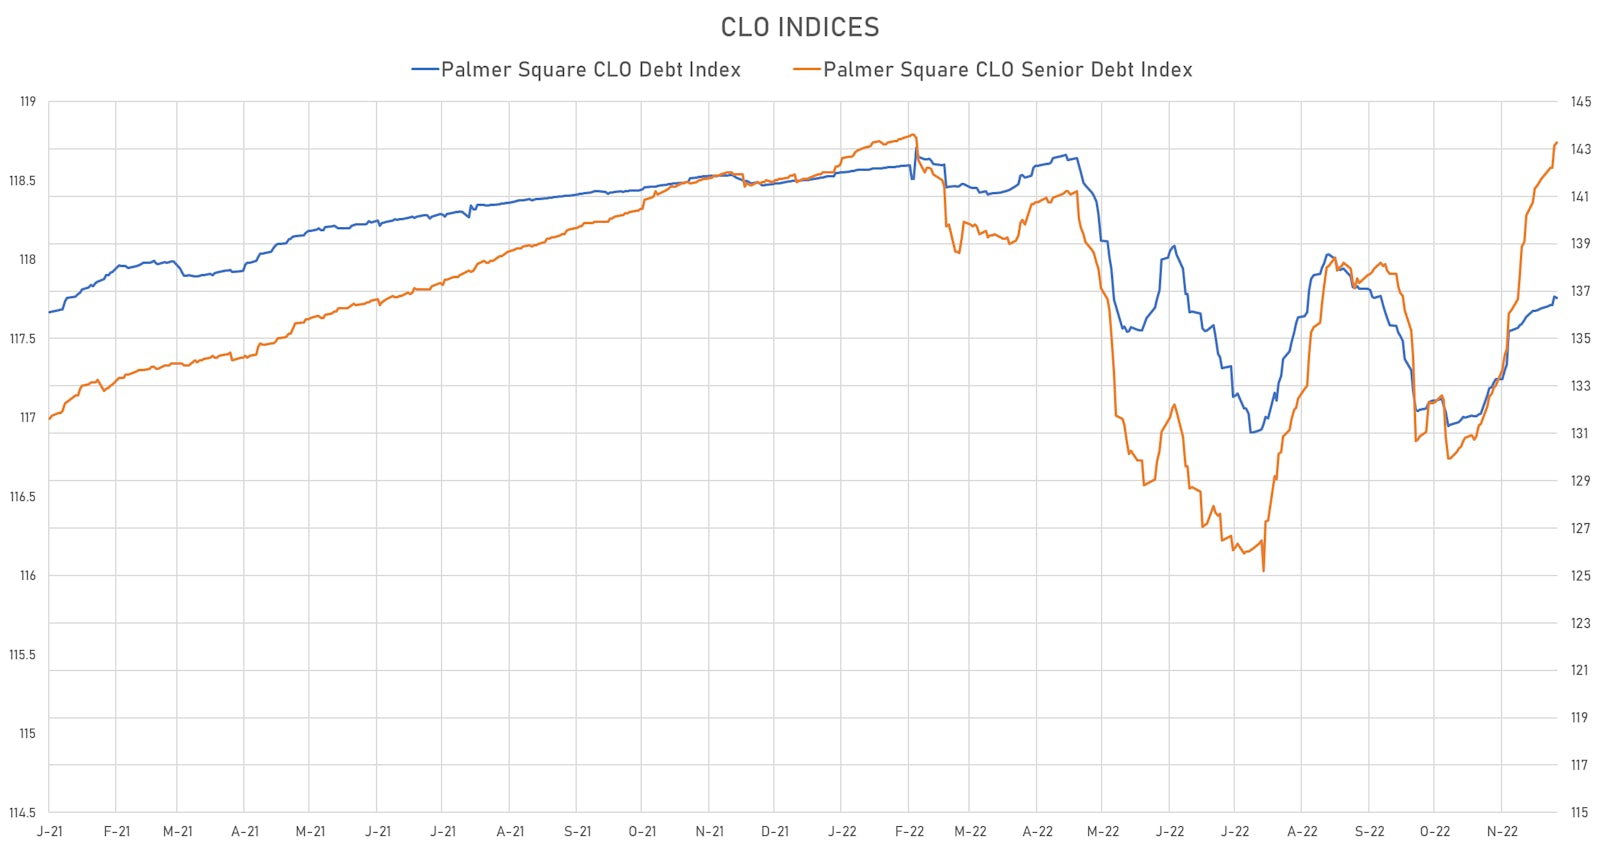 Palmer Square CLO Indices | Sources: ϕpost, Refinitiv data